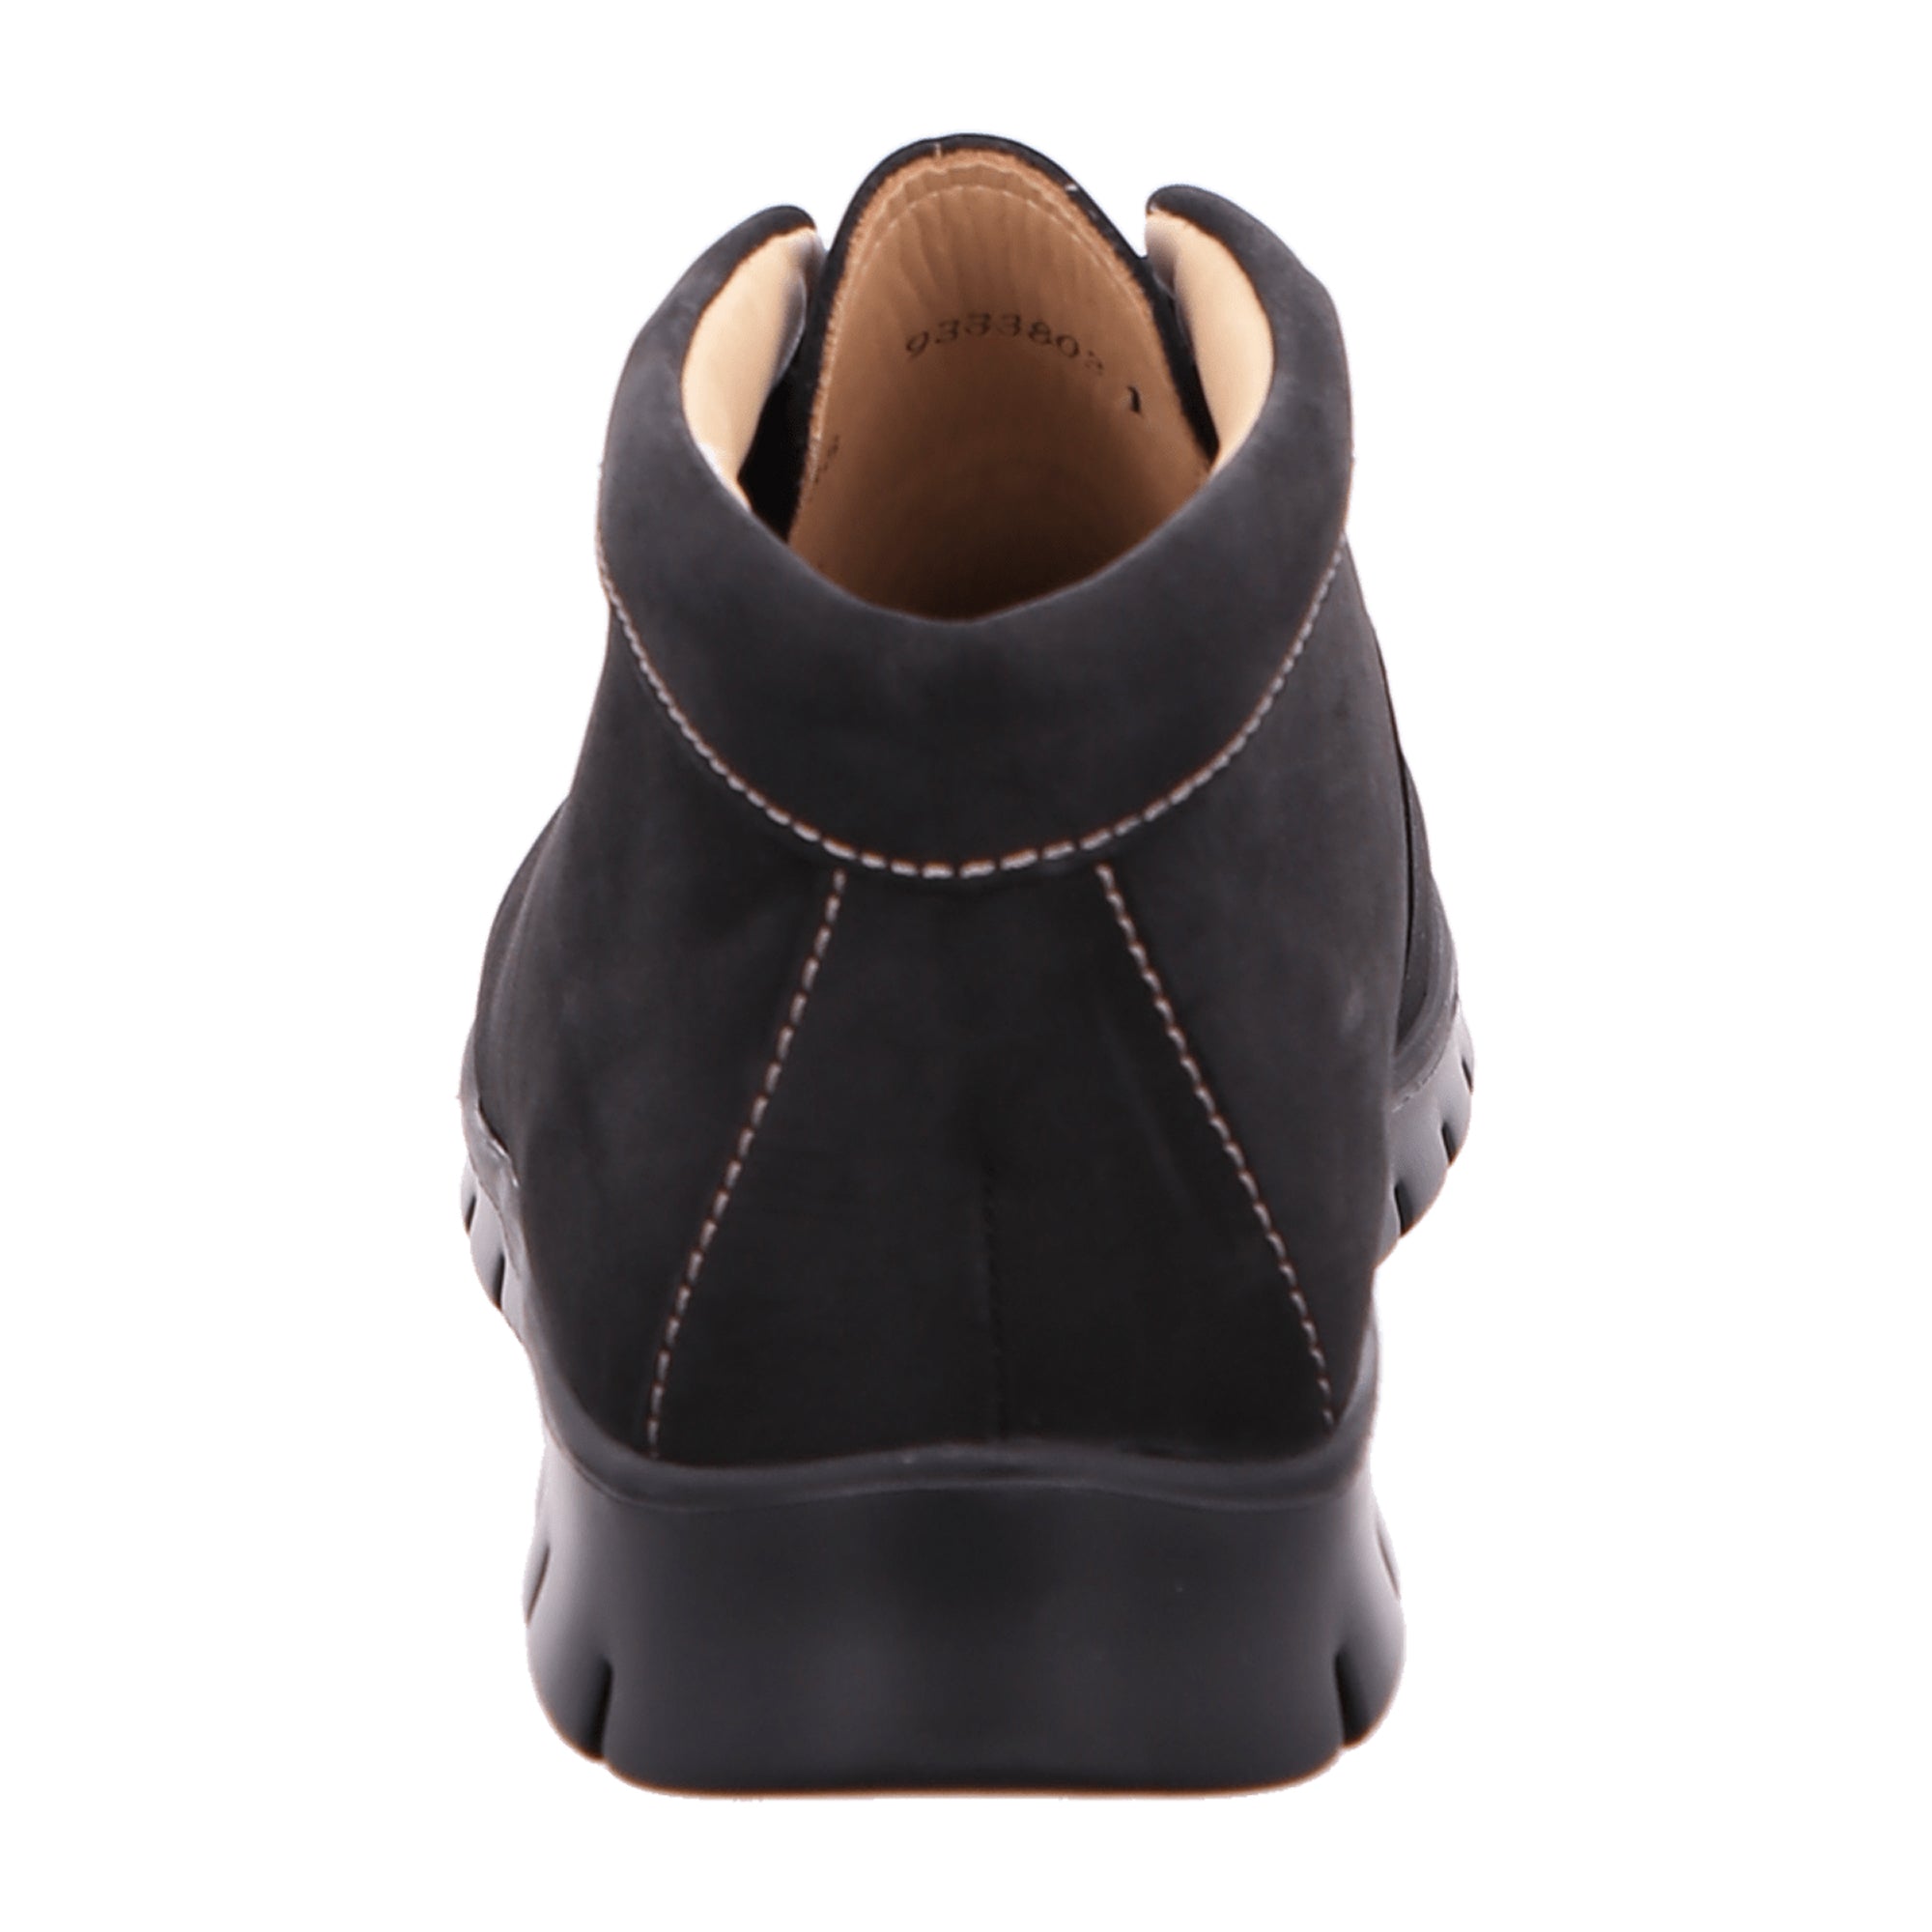 Finn Comfort Leon Women's Comfortable Leather Shoes, Black